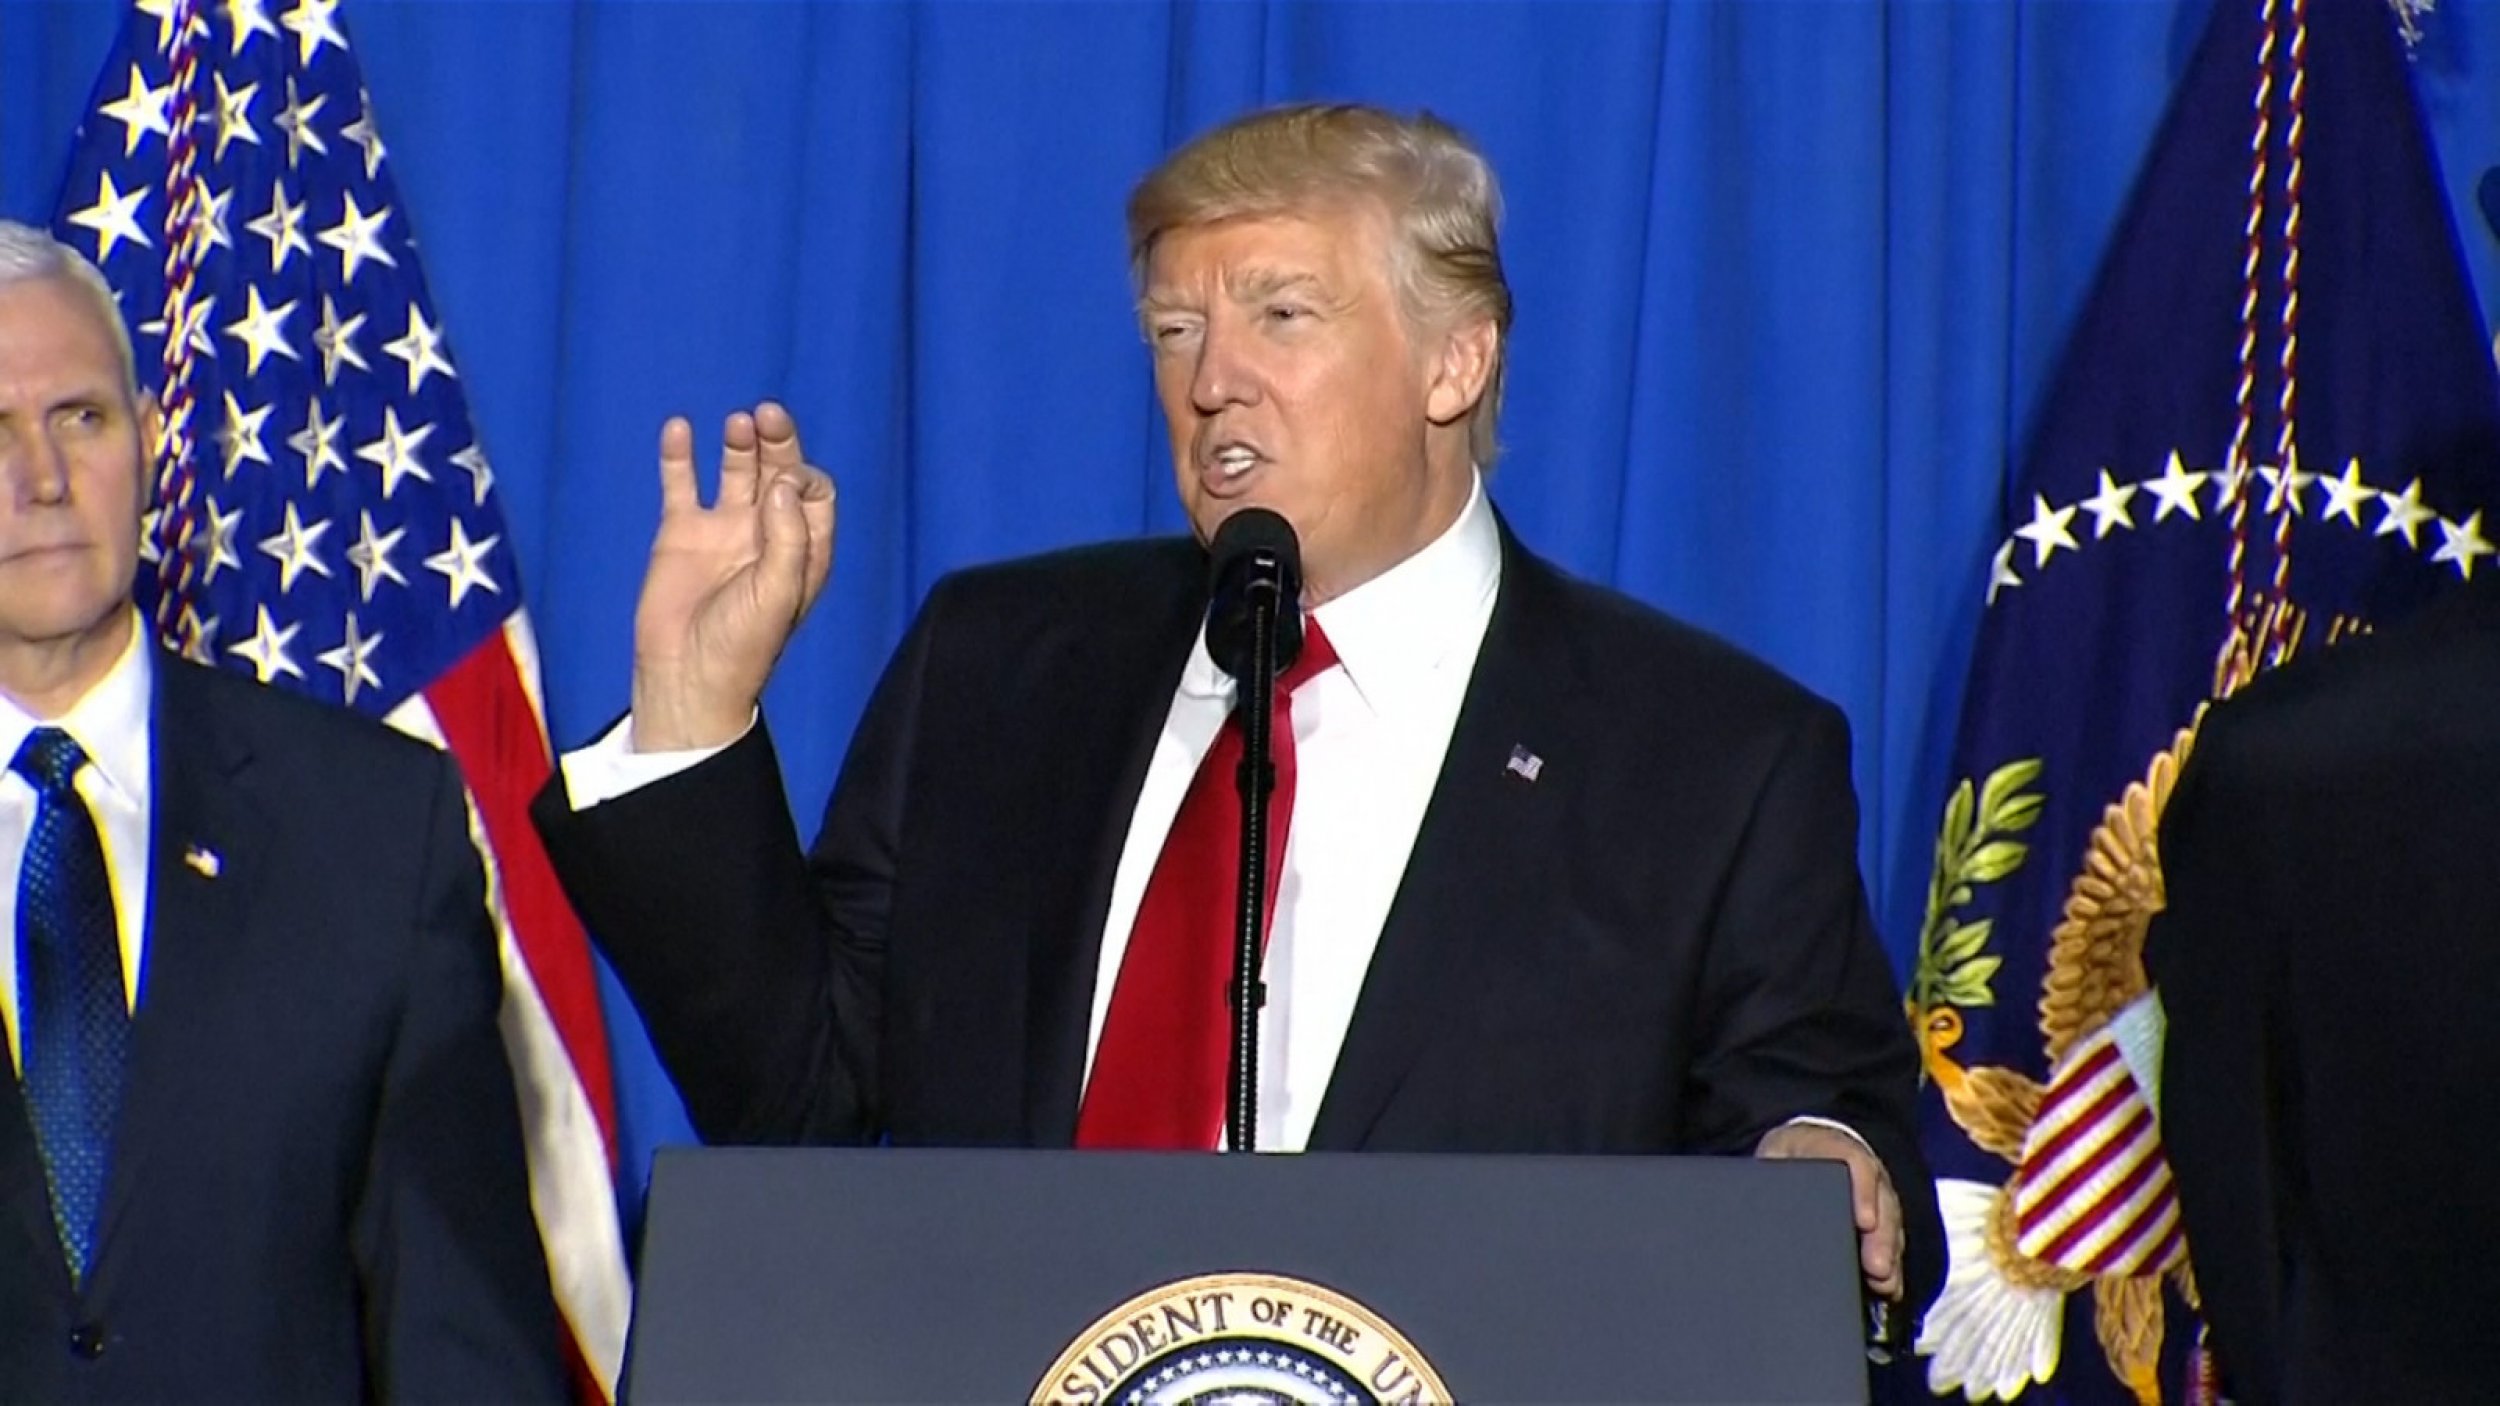 Trump Signs Executive Order For Border Wall